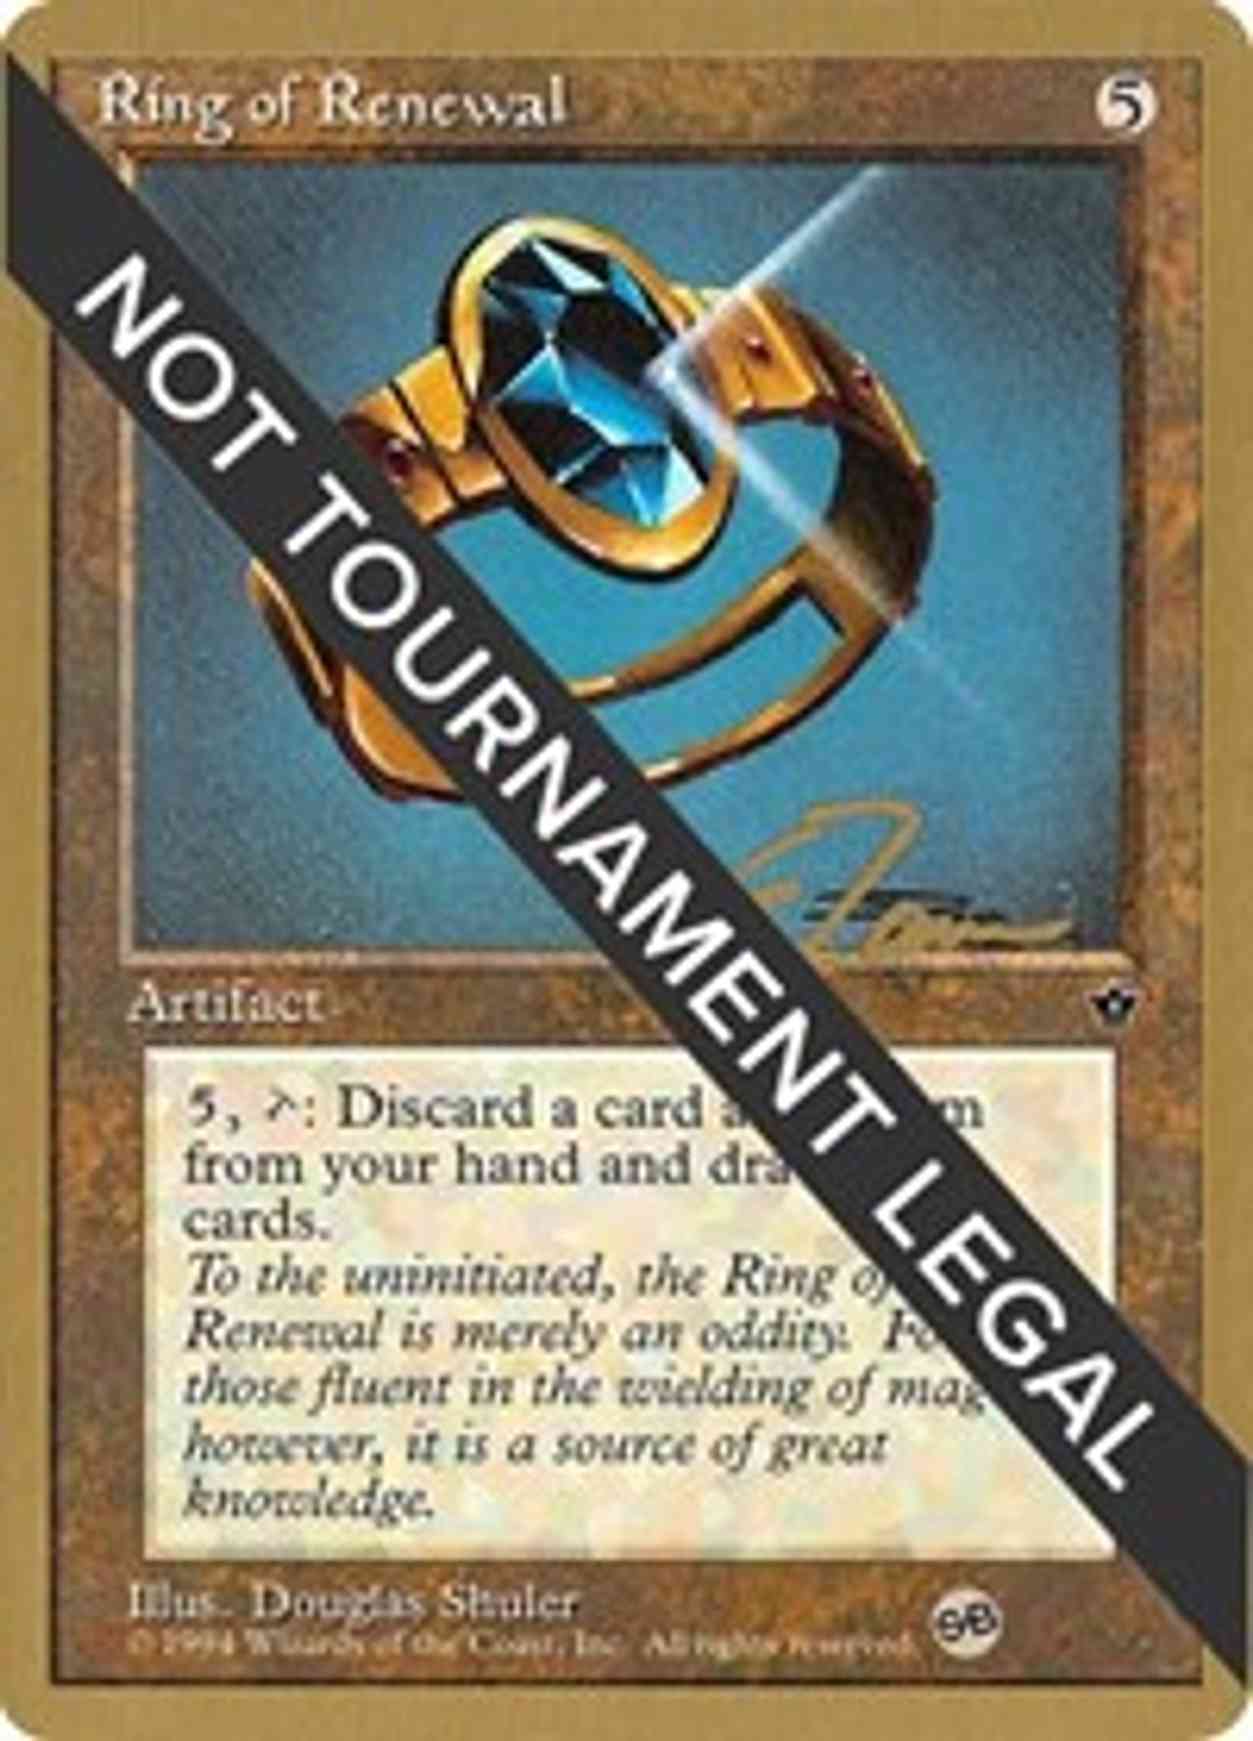 Ring of Renewal - 1996 Eric Tam (FEM) (SB) magic card front